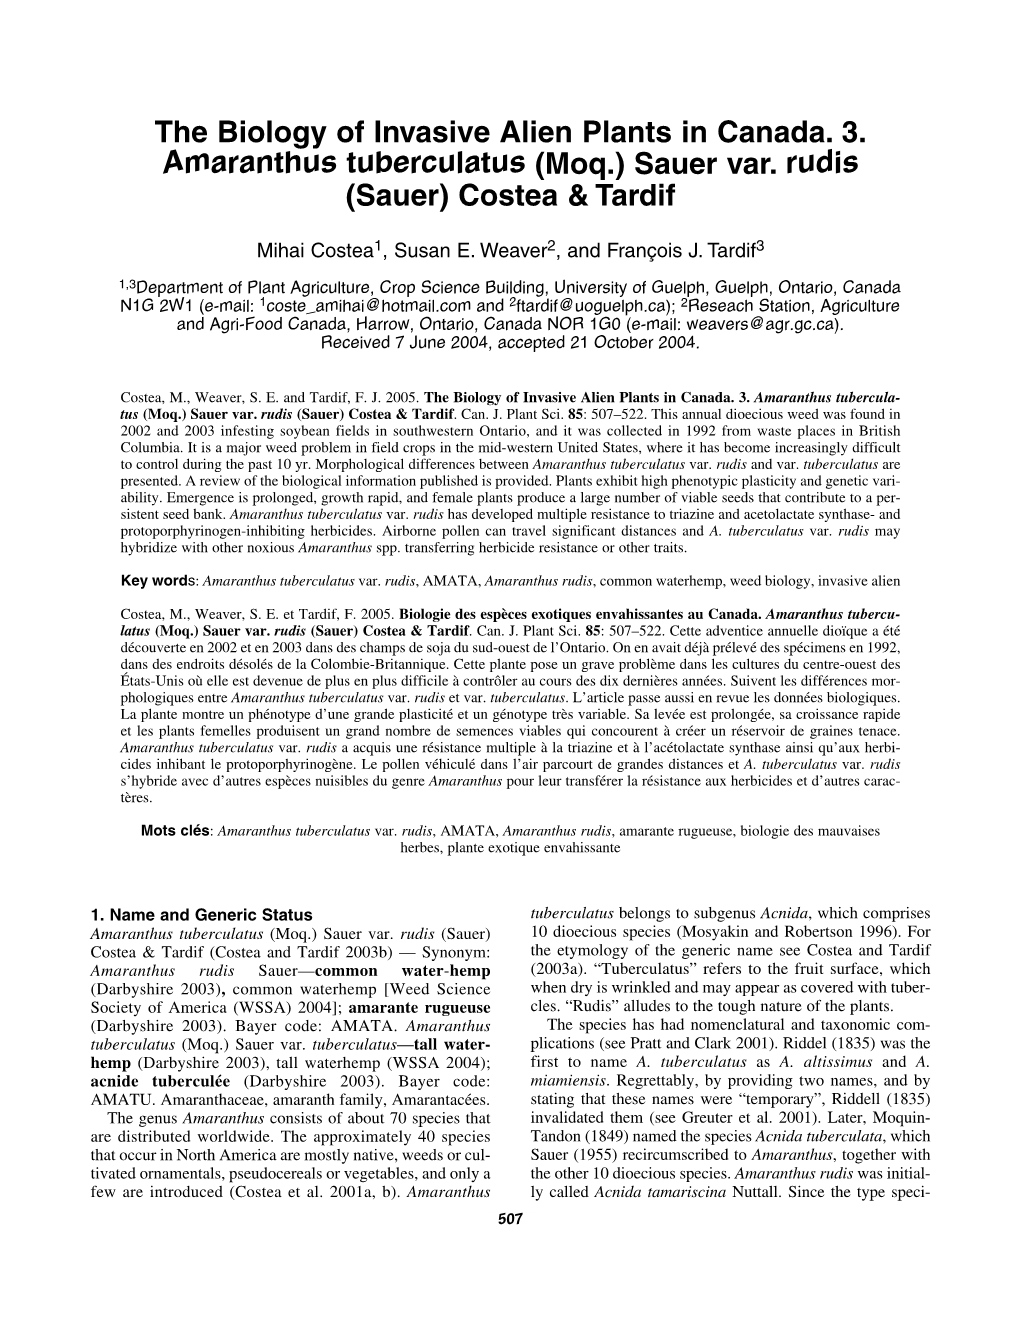 The Biology of Invasive Alien Plants in Canada. 3. Amaranthus Tuberculatus (Moq.) Sauer Var